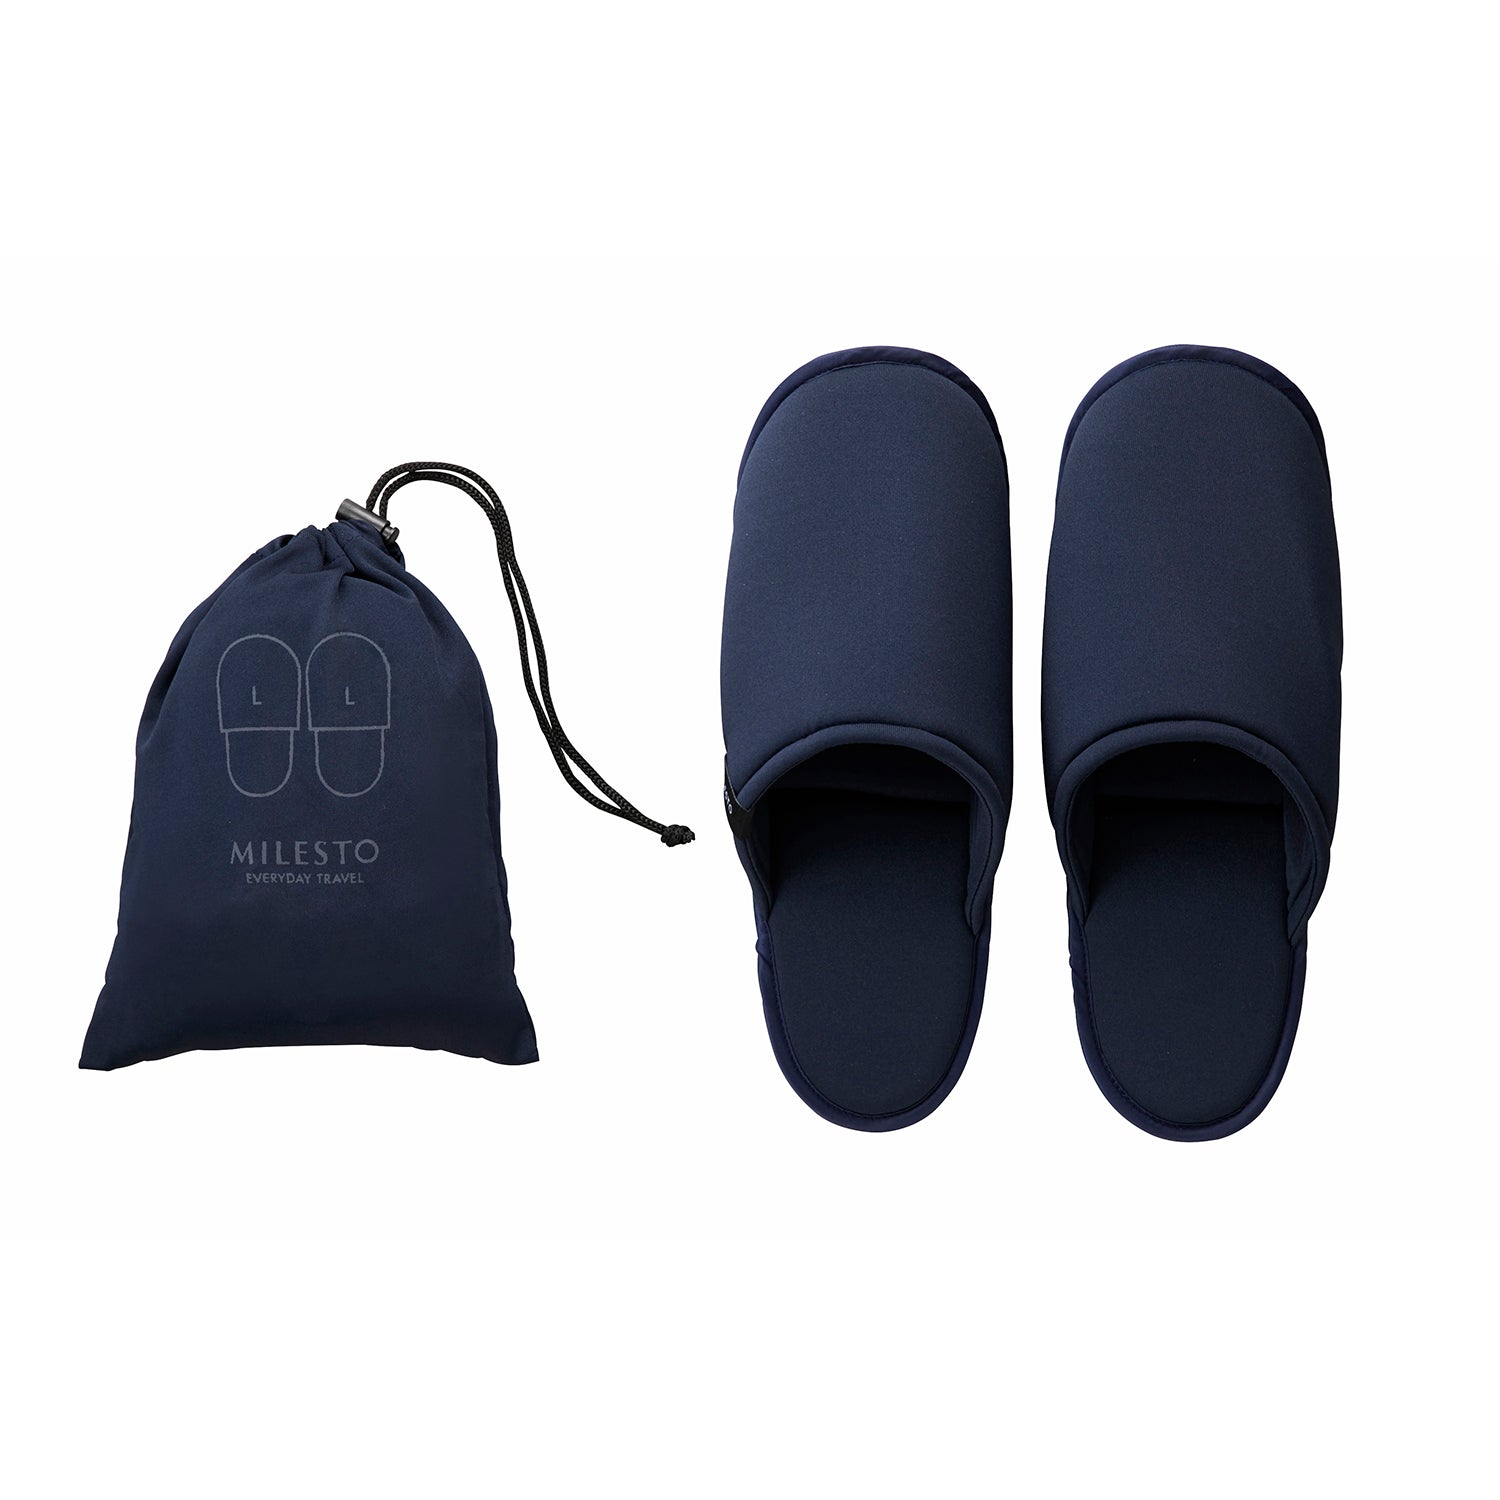 MILESTO UTILITY 可清洗式摺疊拖鞋 L - 深藍色 MLS608-NV